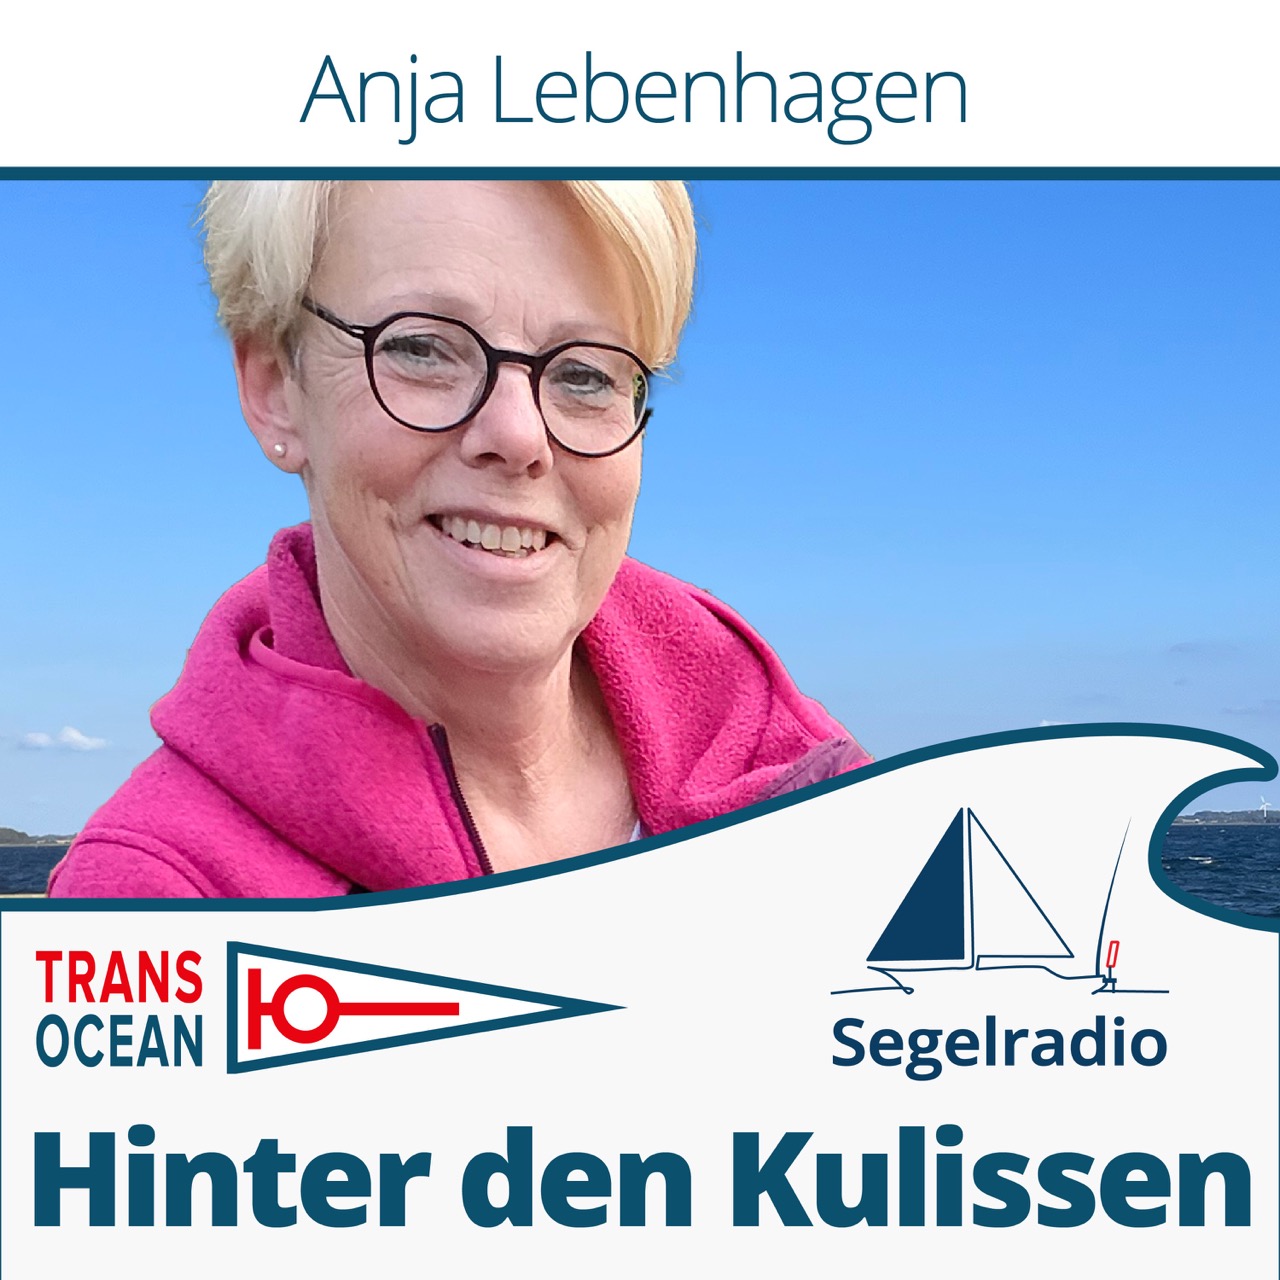 Hinter den Kulissen des Trans Ocean e.V. – ”Geschäftsführerin” Anja Lebenhagen